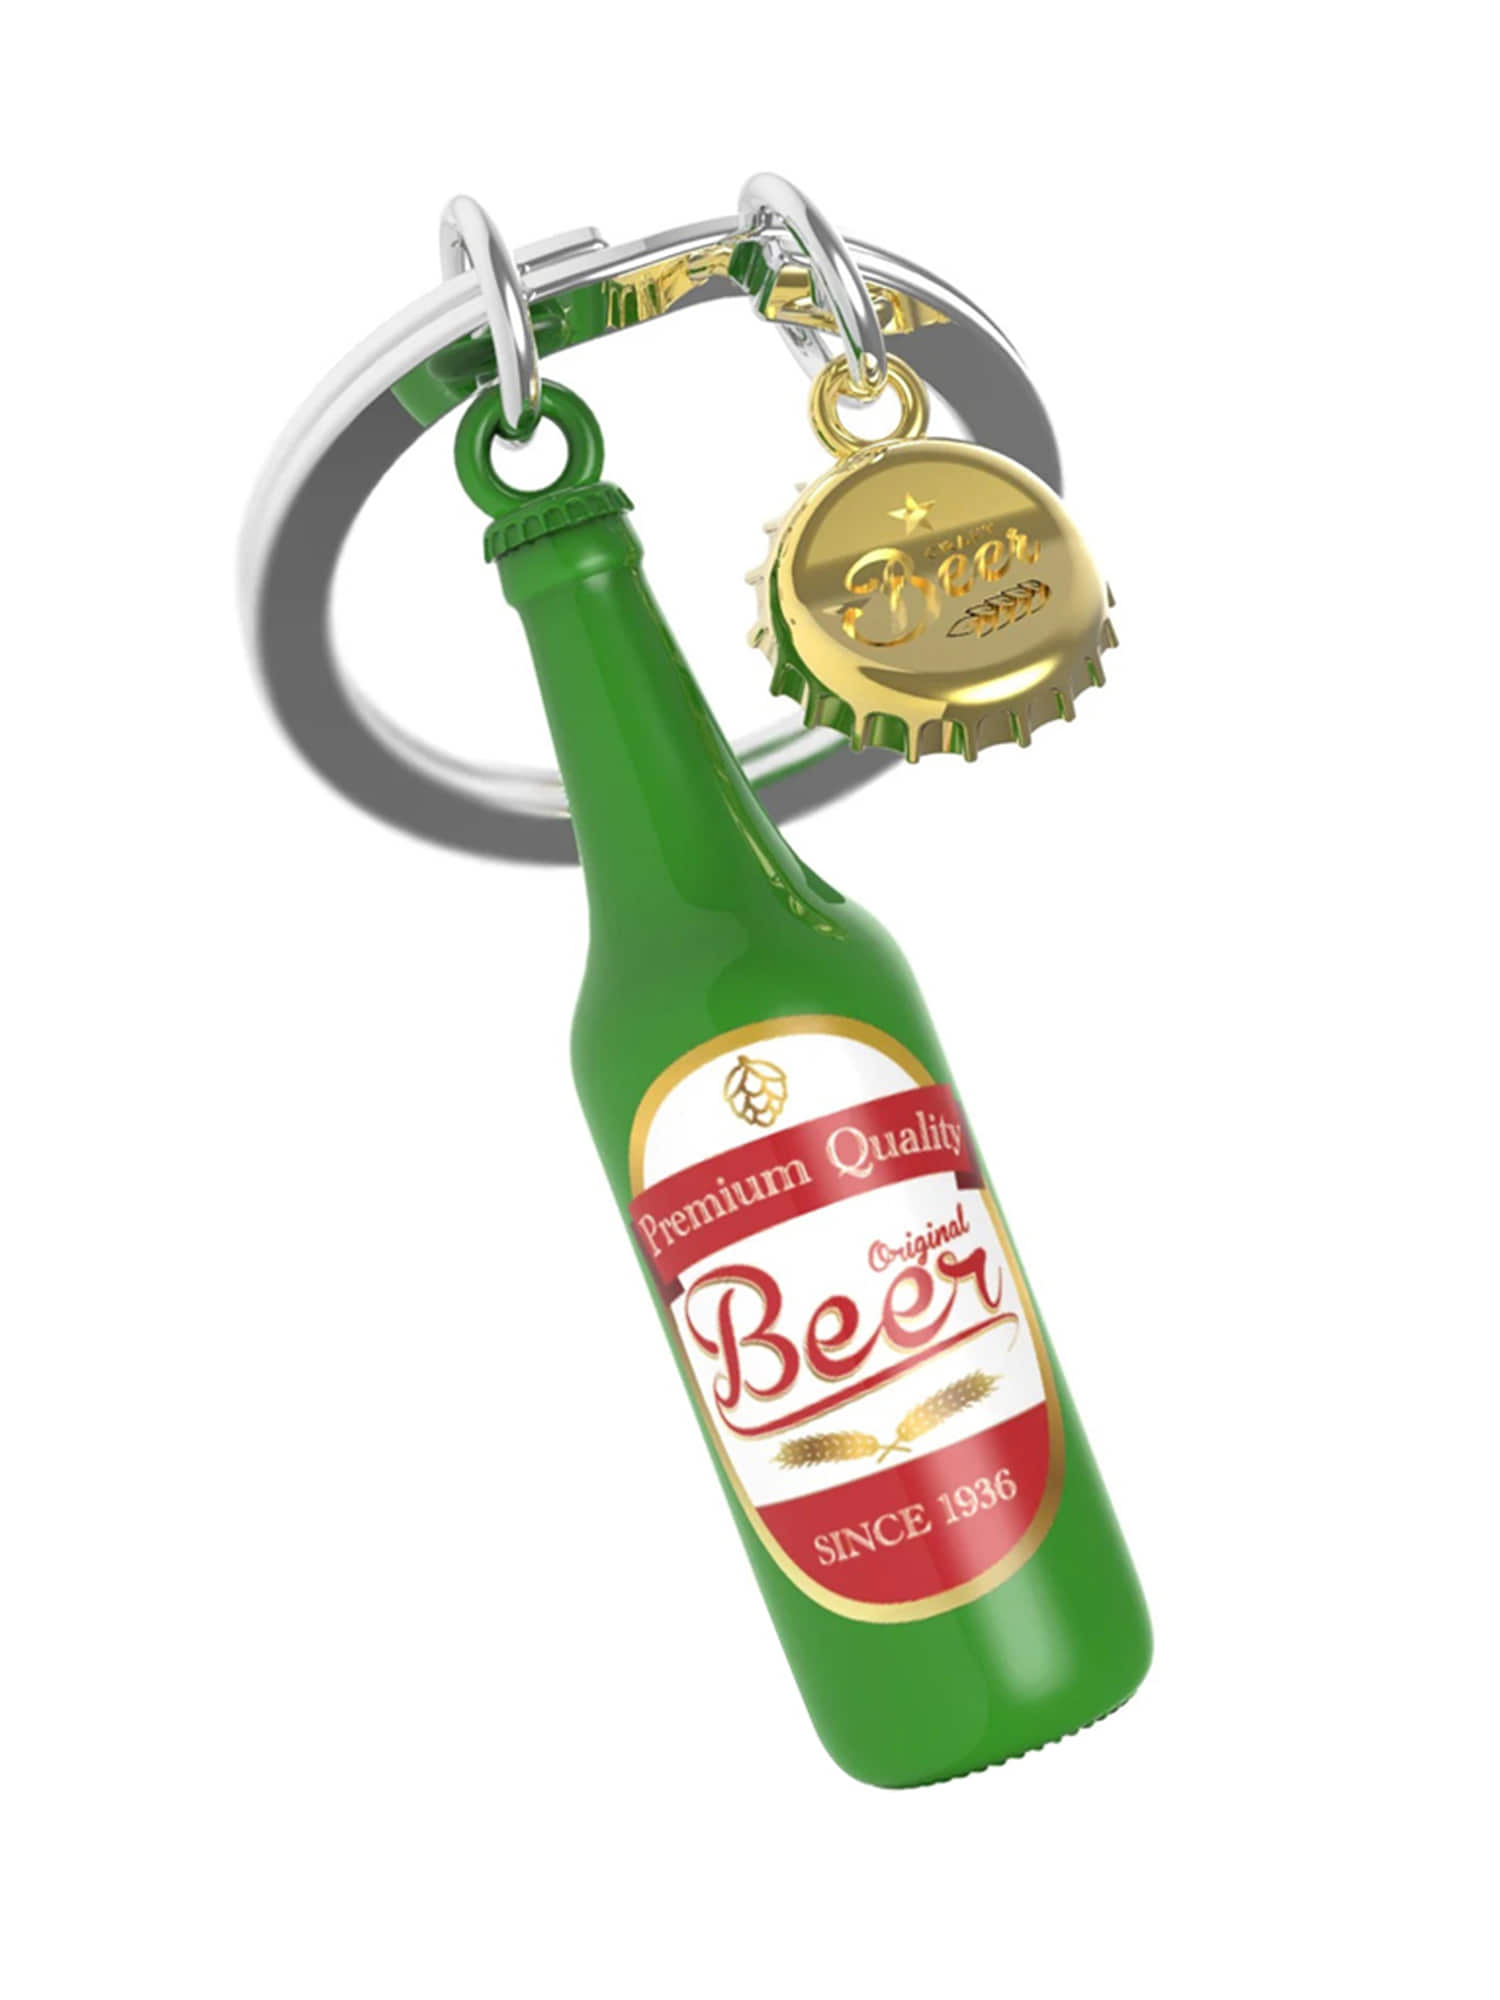 Keychain - Green beer bottle